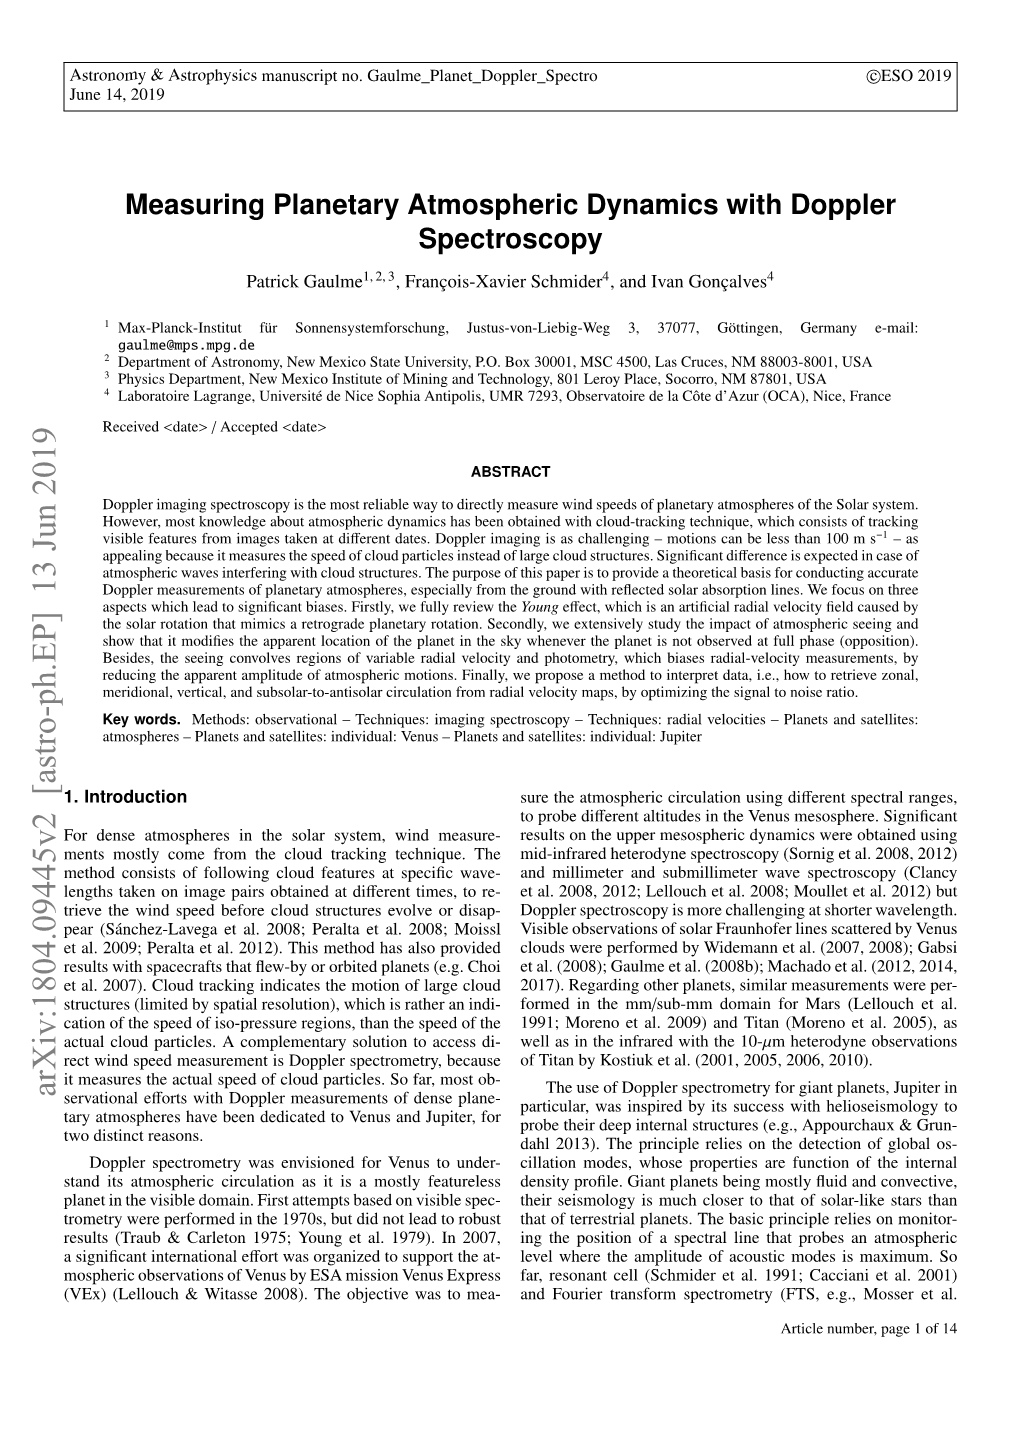 Measuring Planetary Atmospheric Dynamics with Doppler Spectroscopy Patrick Gaulme1, 2, 3, François-Xavier Schmider4, and Ivan Gonçalves4